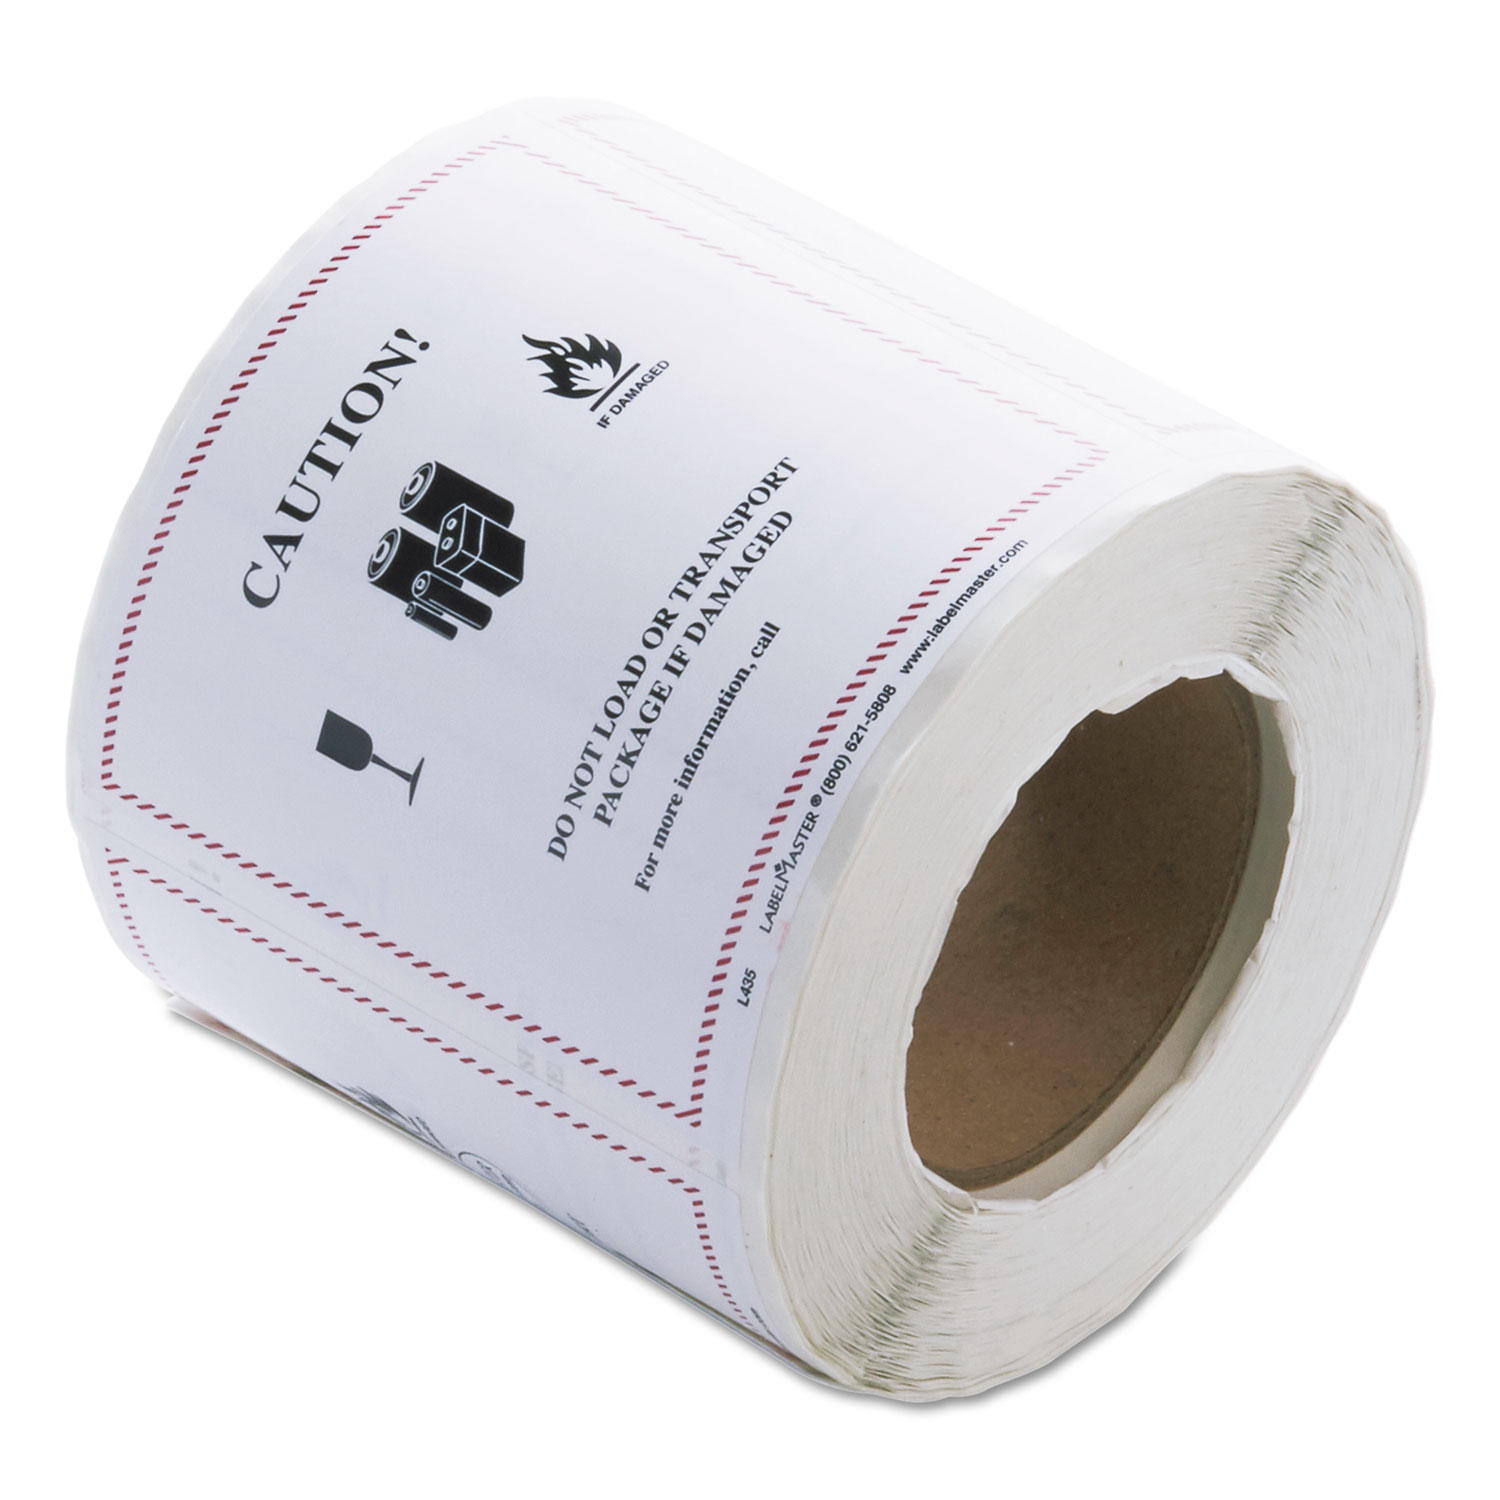 Hazmat Self-Adhesive Shipping Label, 5 7/8 x 5 1/4, CAUTION, 500/Roll